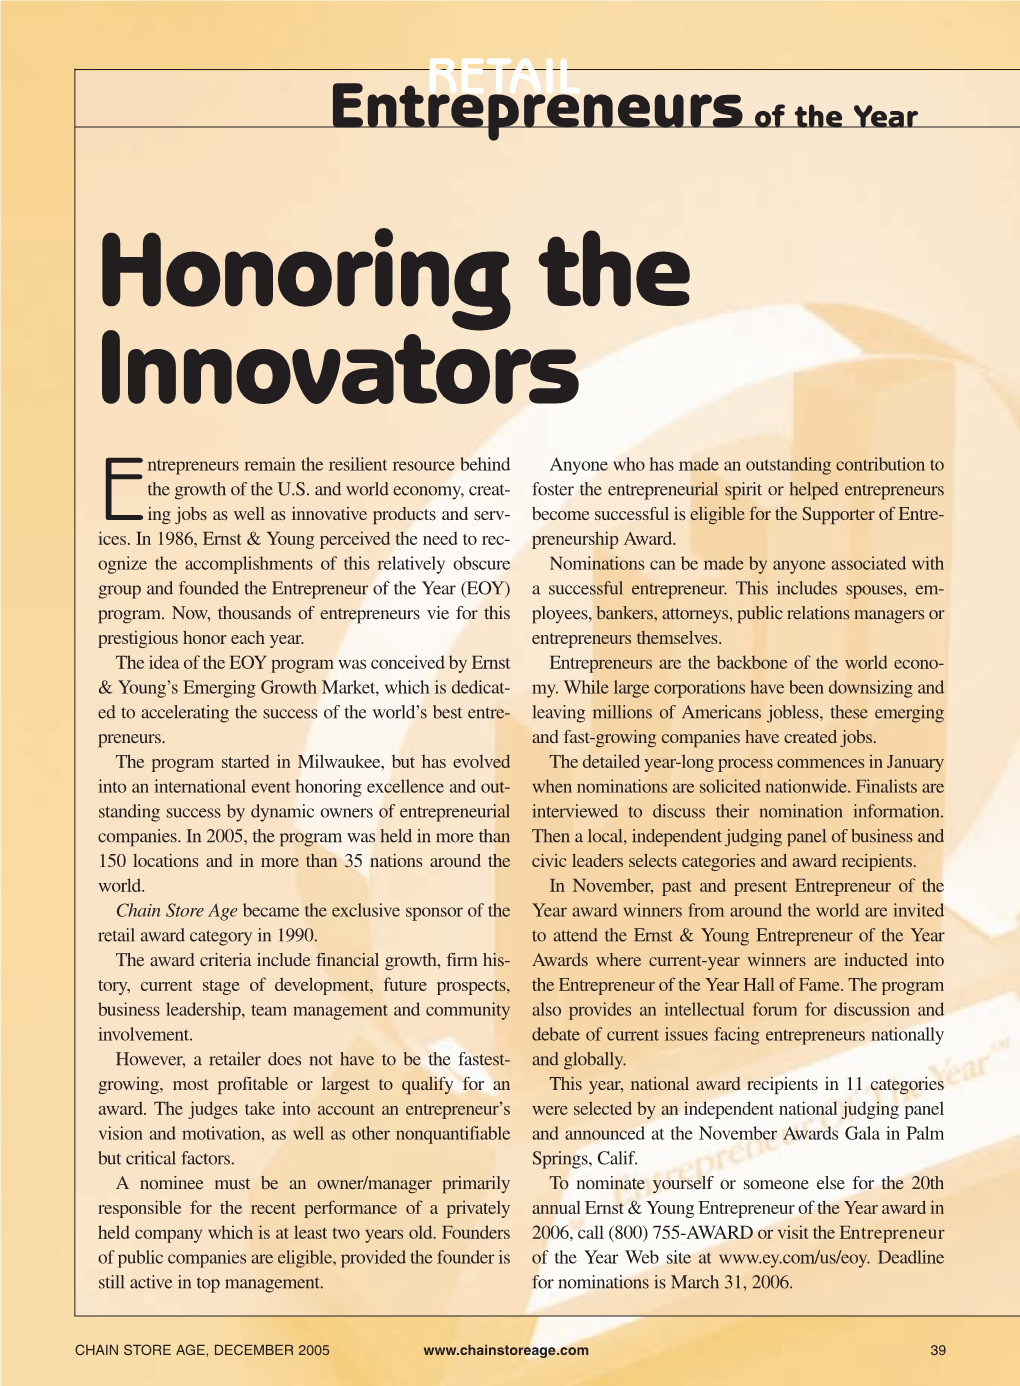 Honoring the Innovators